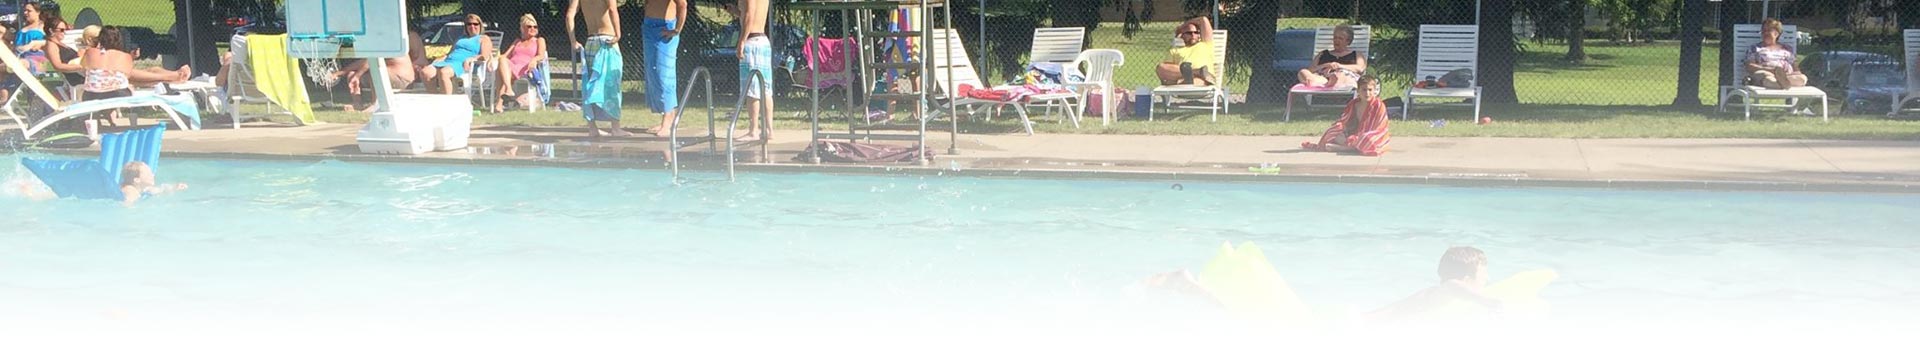 pg-banner-pool